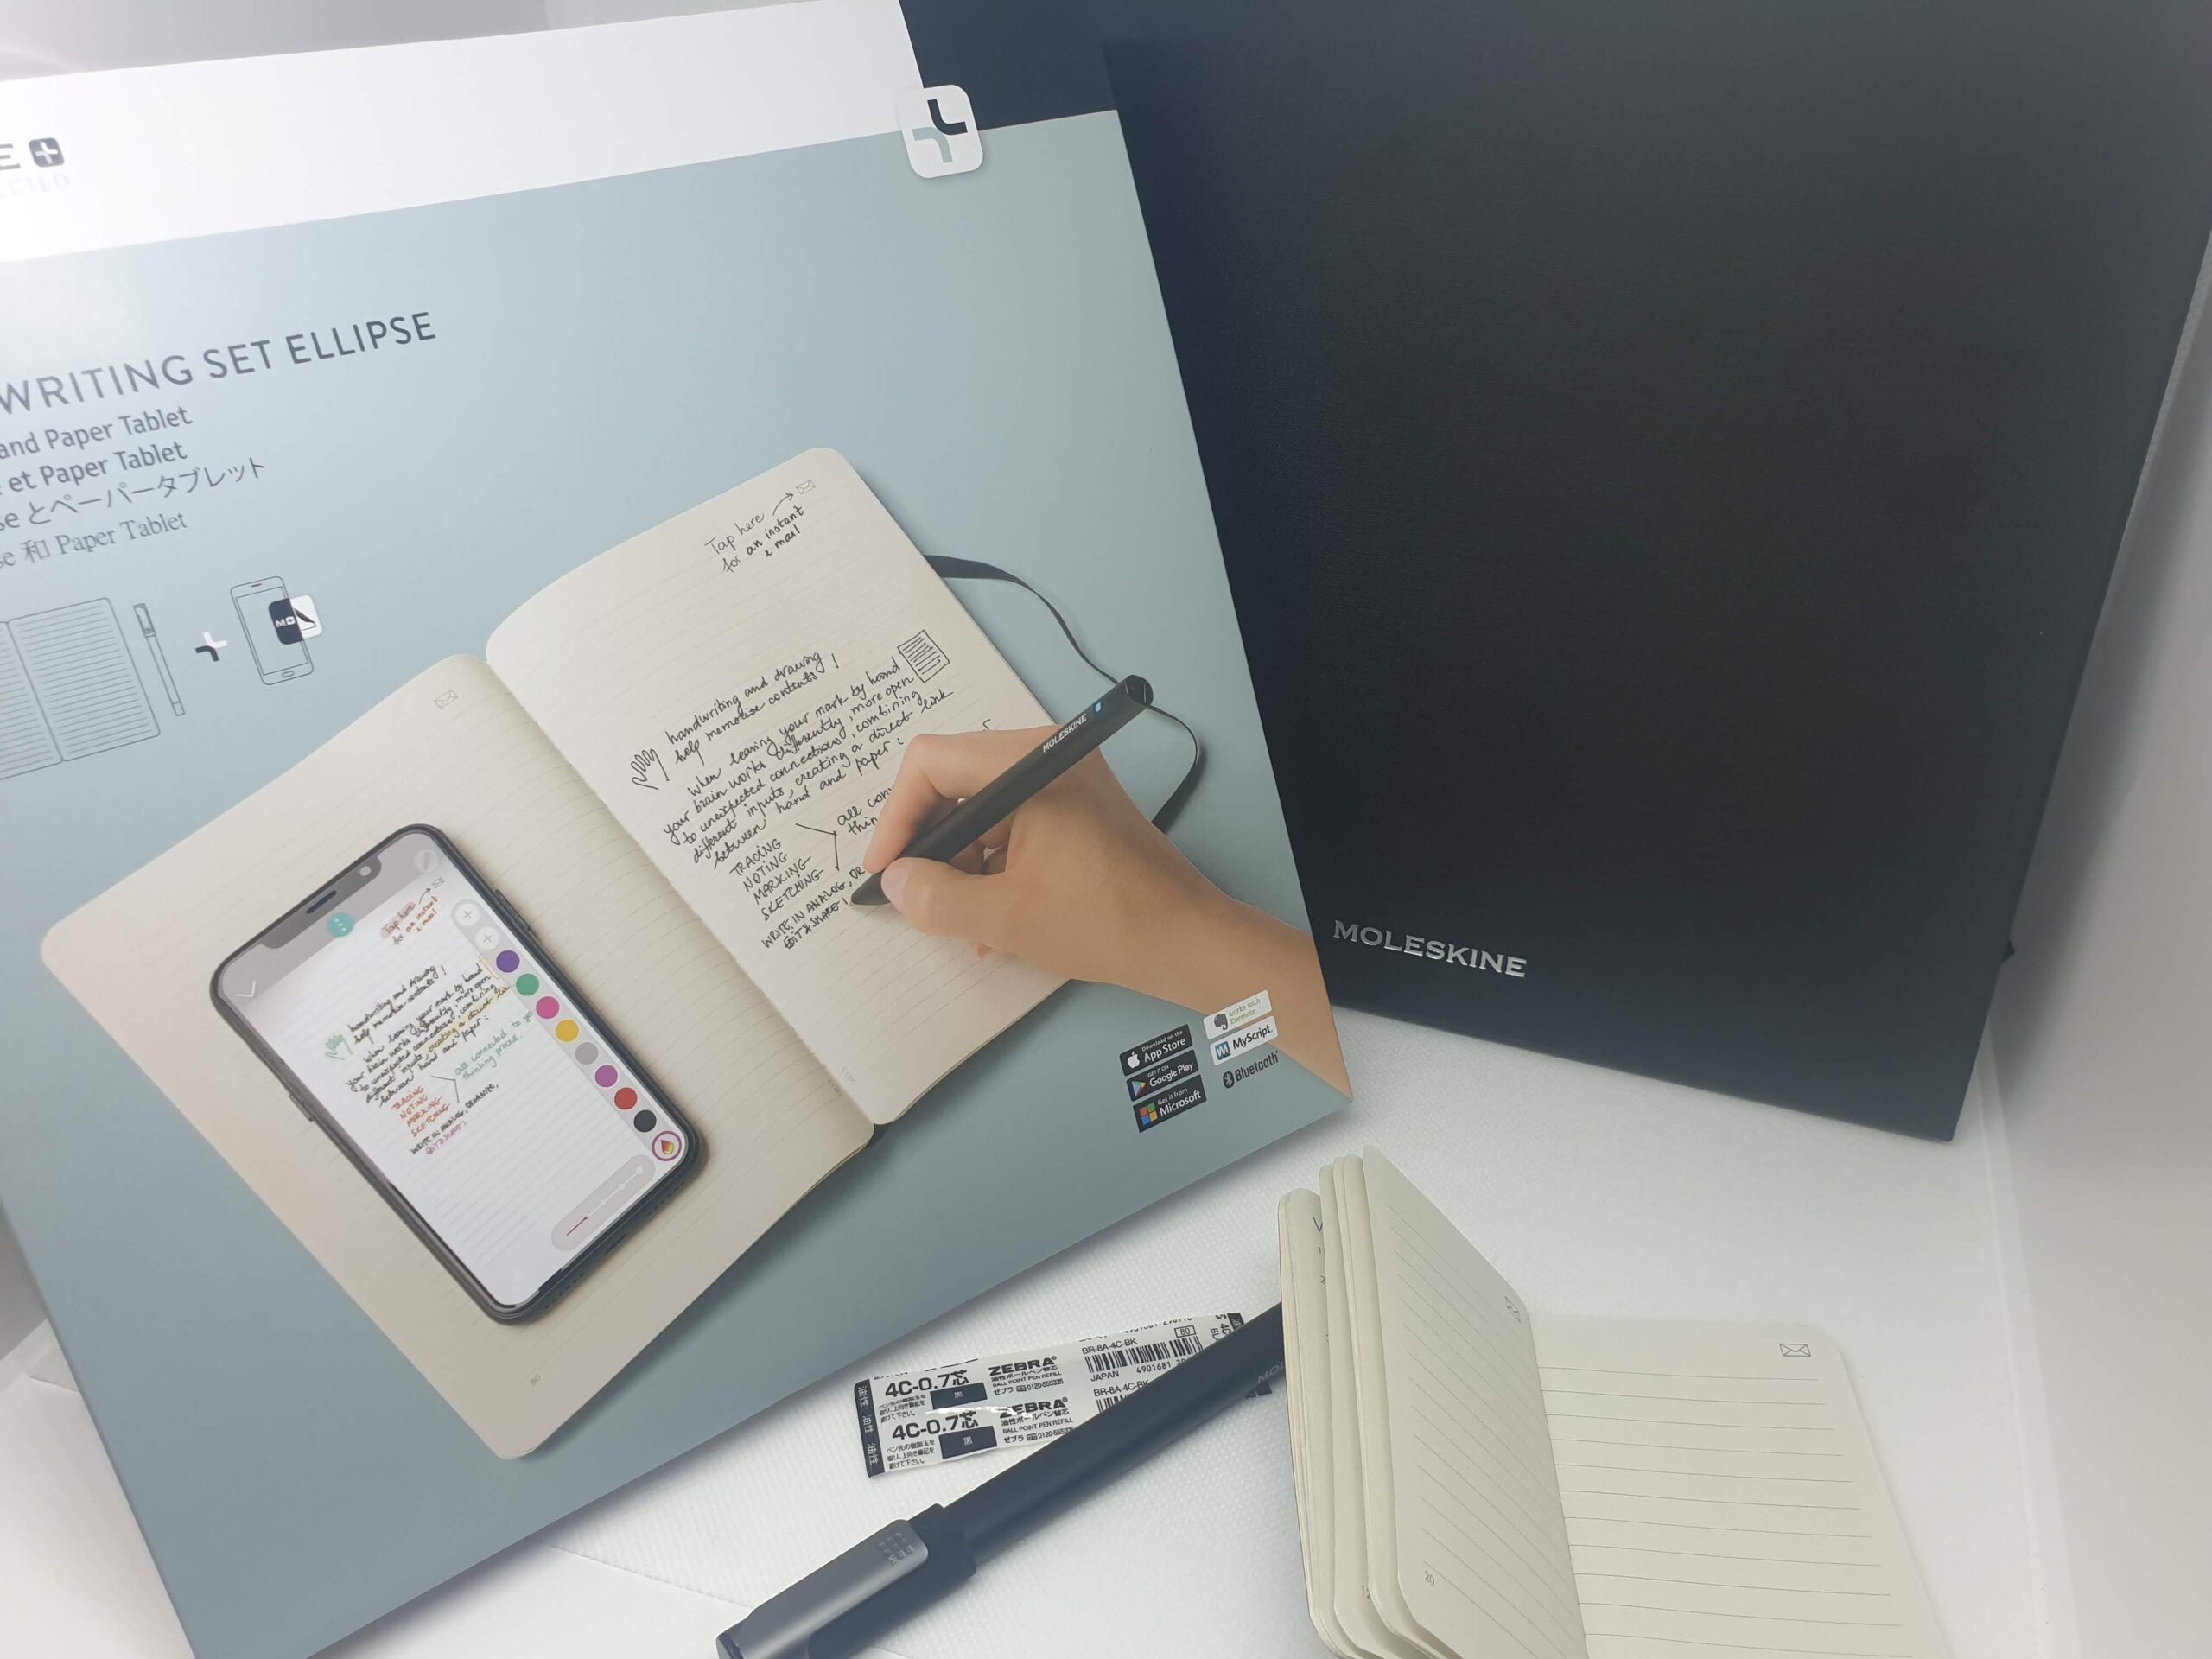 Moleskine Pen+ Ellipse Smart Writing System REVIEW - MacSources